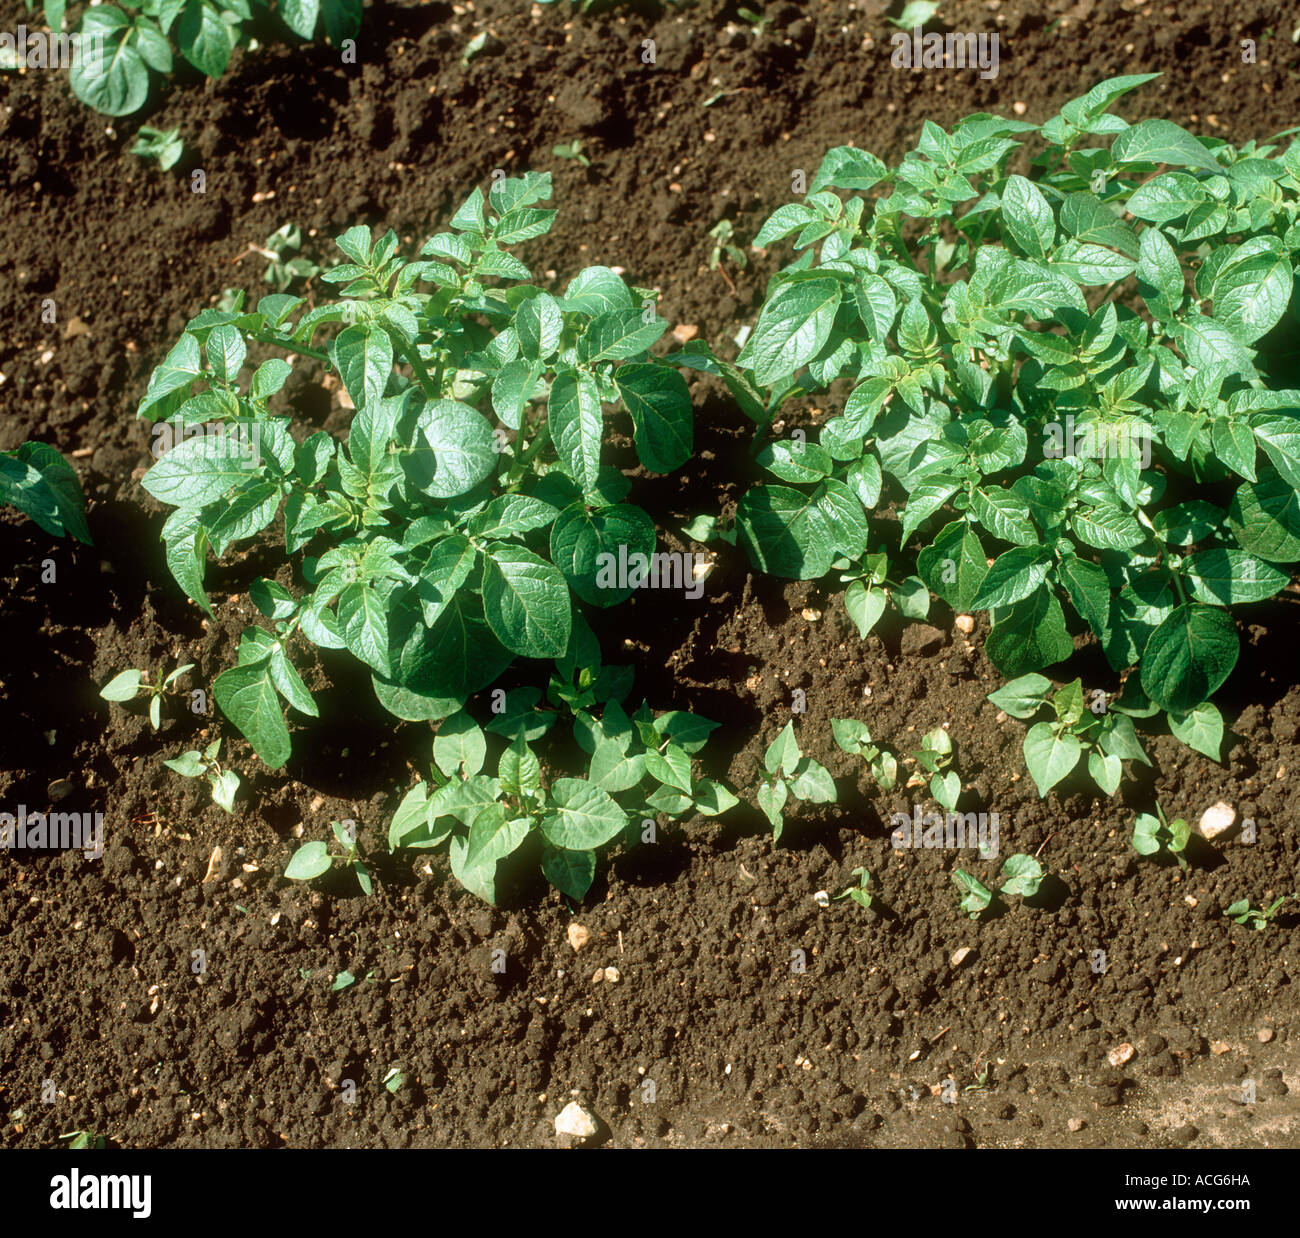 Black bindweed Bilderdykia convolvulus seedlings in young potato crop Stock Photo